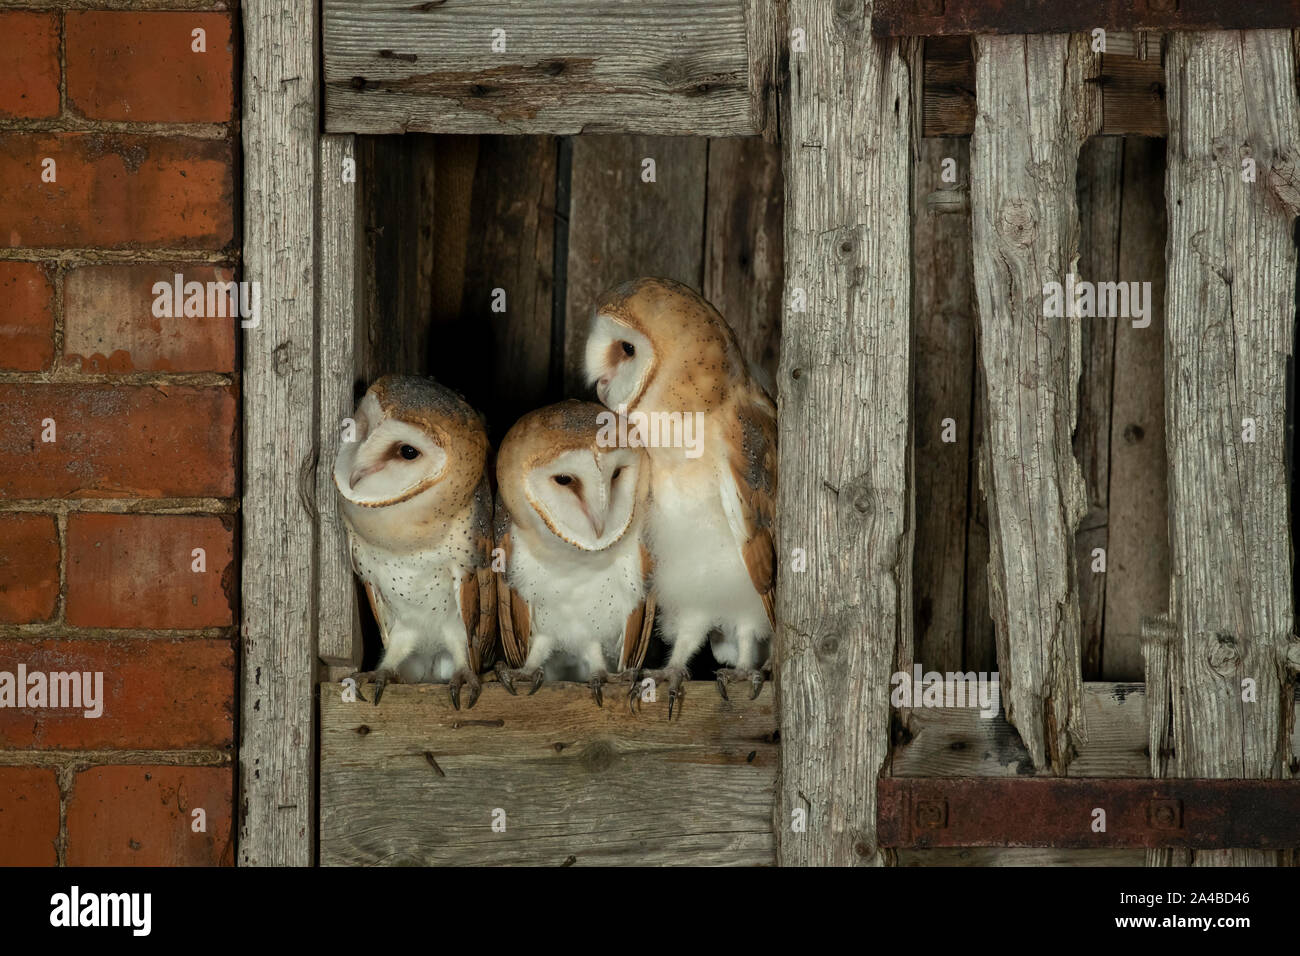 Barn owl (Tyto alba) fledging from a barn Stock Photo